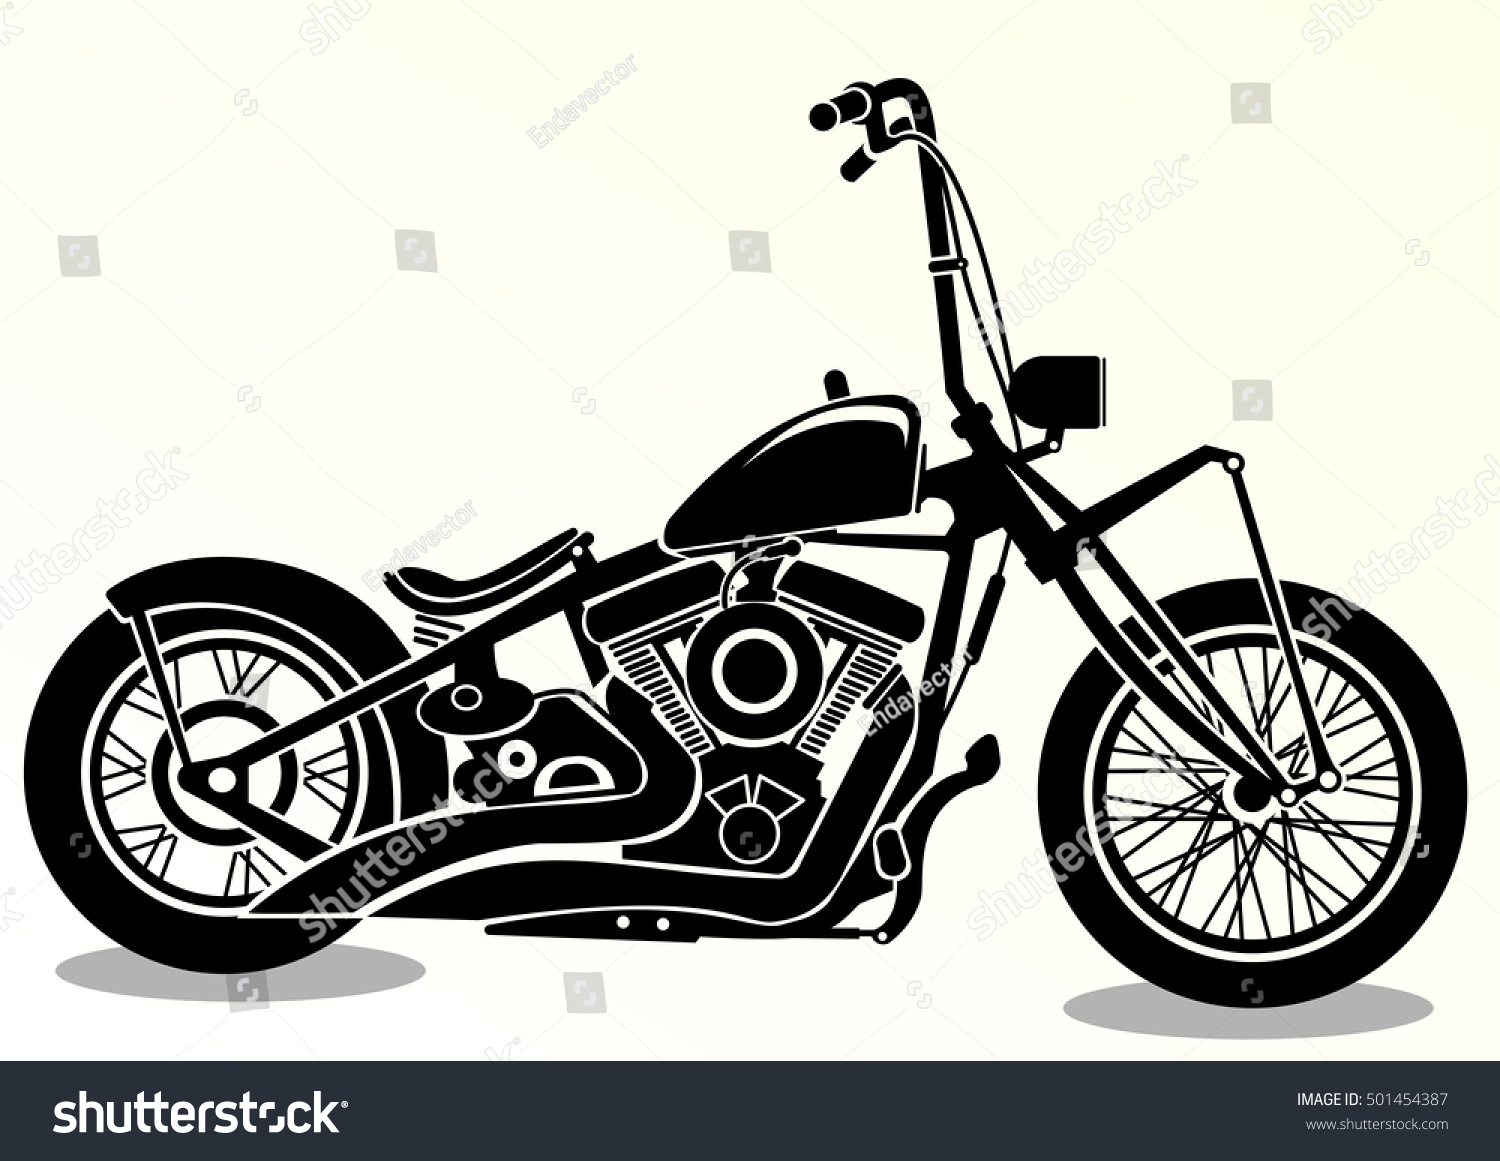 Download Old Vintage Motorcycle Stock Vector Illustration 501454387 : Shutterstock